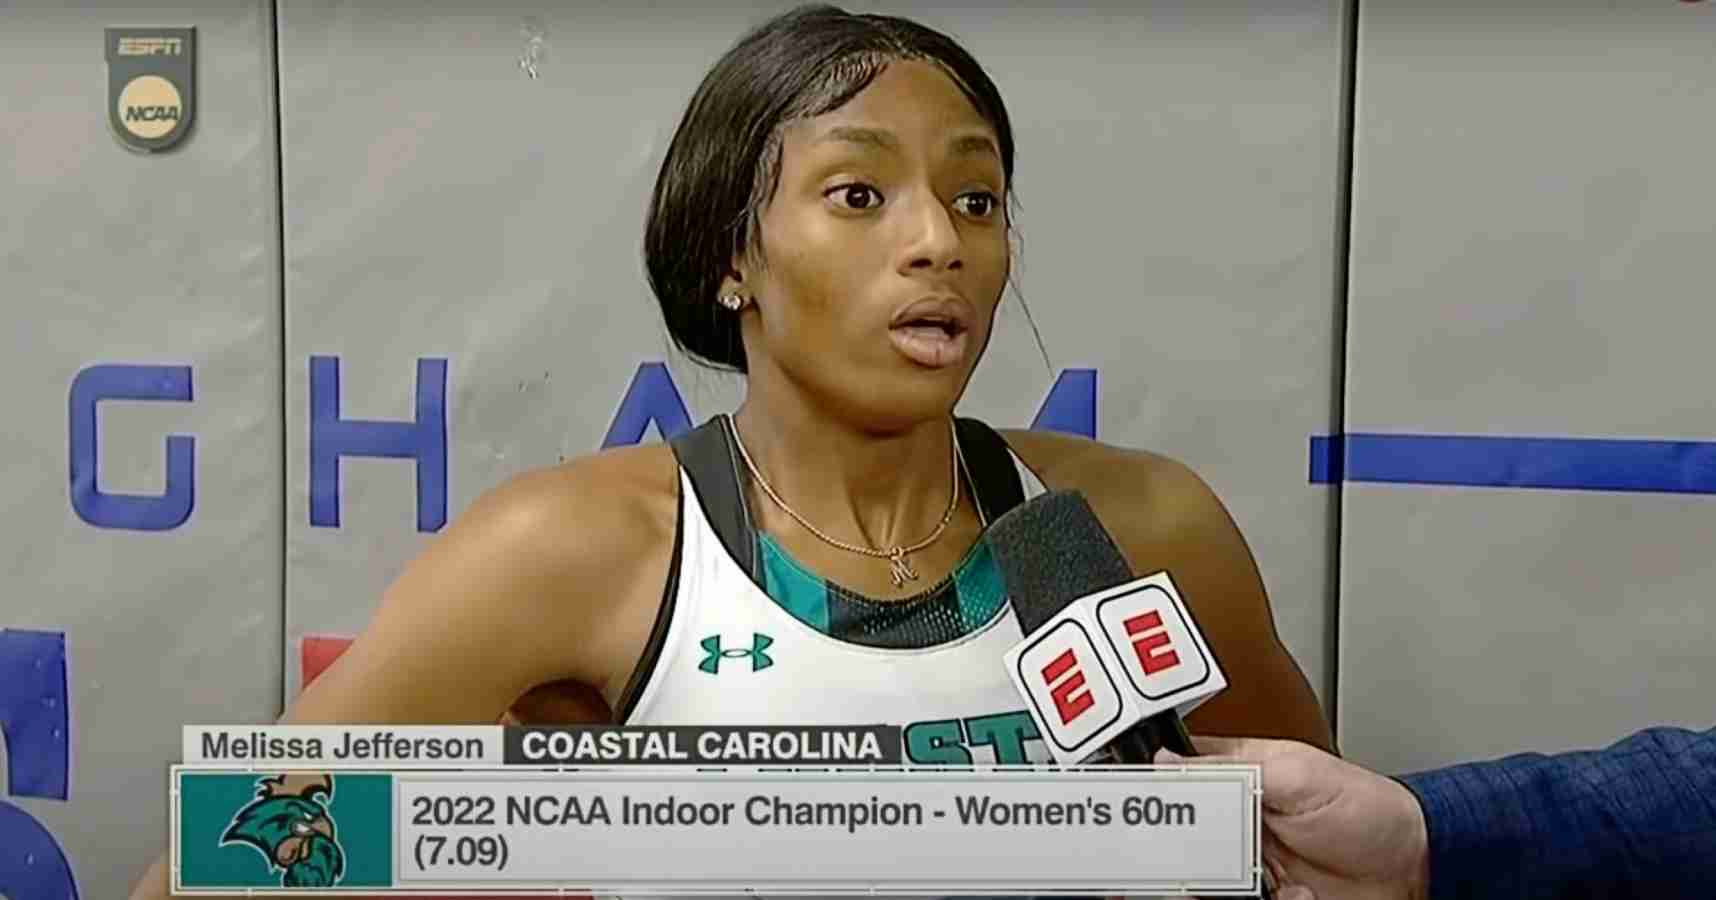 Melissa-Jefferson-of-Coastal-Carolina-wins-NCAA-title